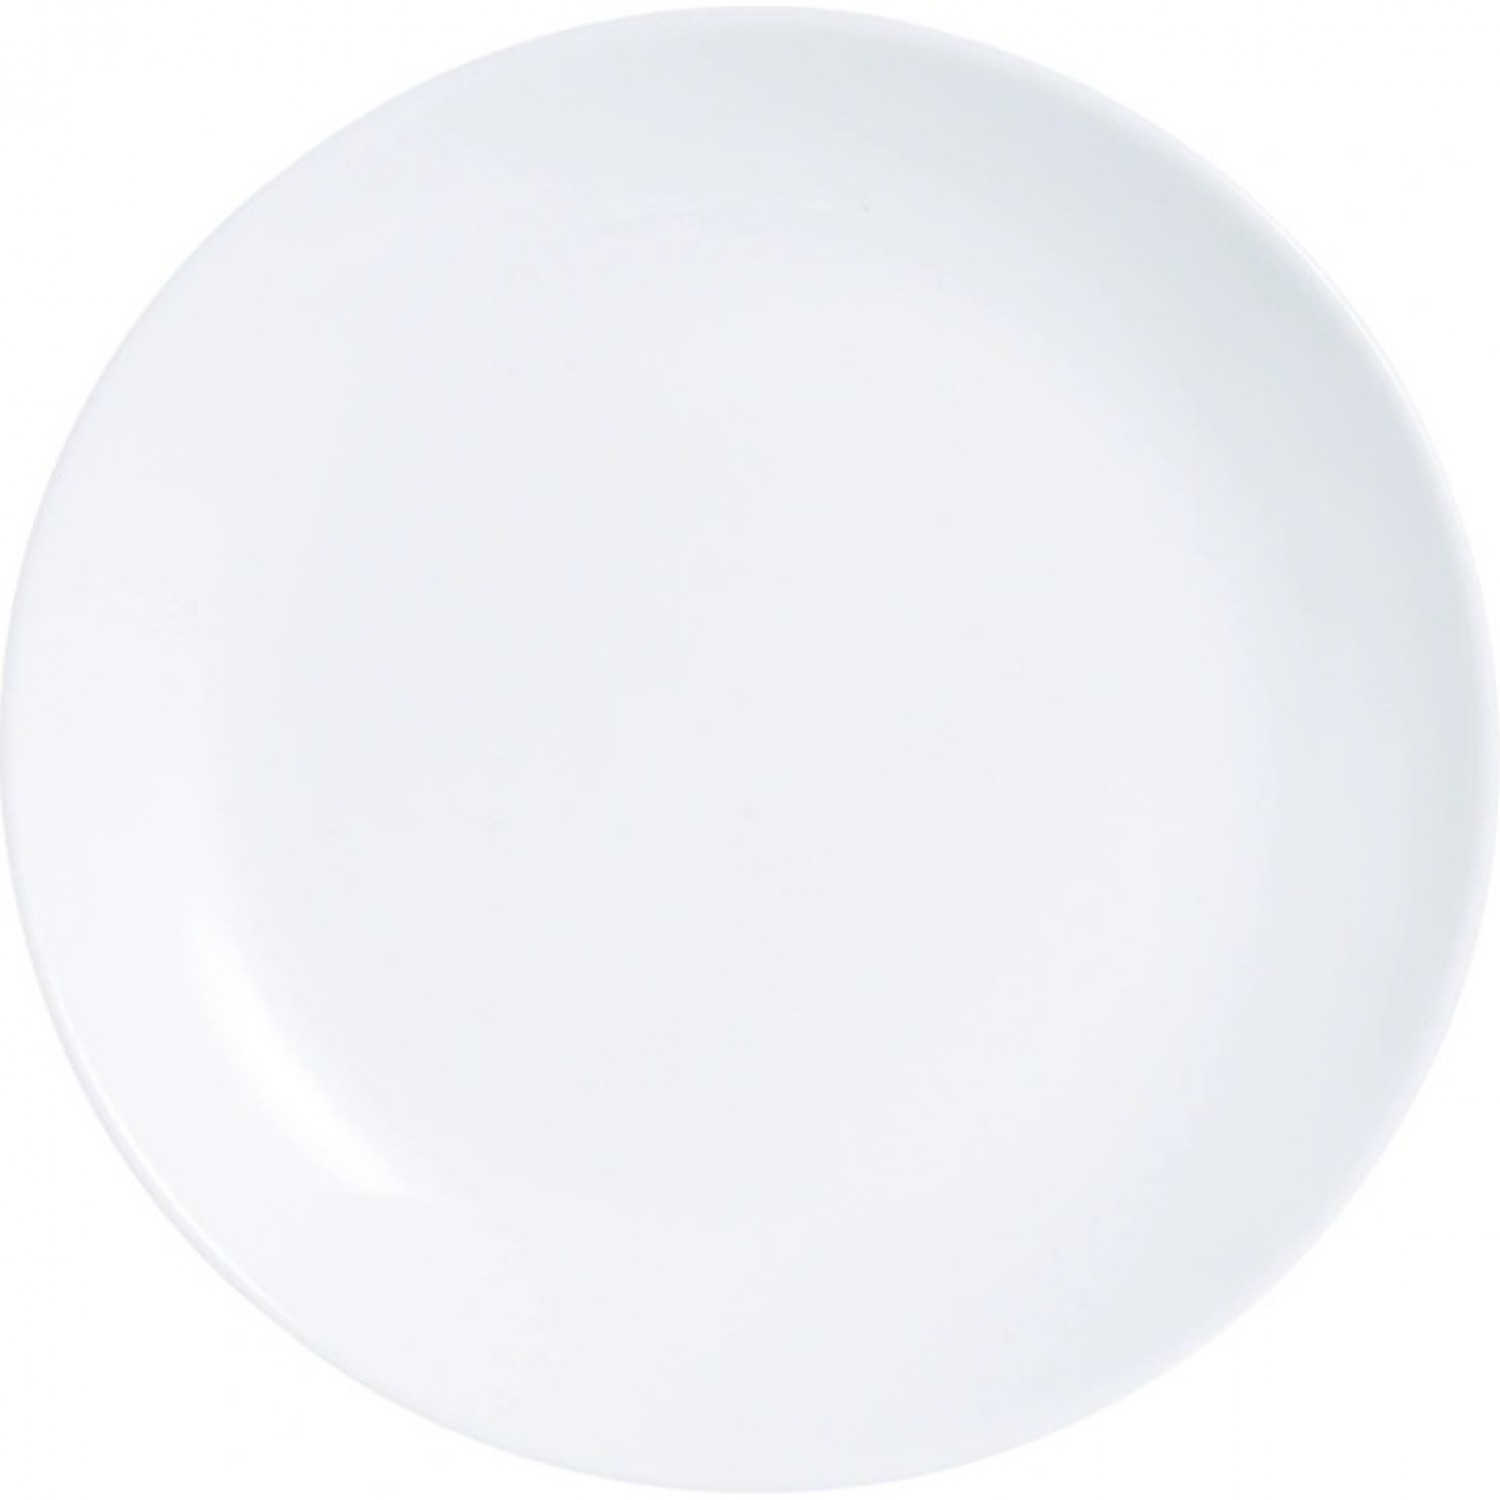 Тарелка обеденная ДИВАЛИ 25см LUMINARC D6905 (P3299) тарелка обеденная дивали 25см luminarc d6905 p3299